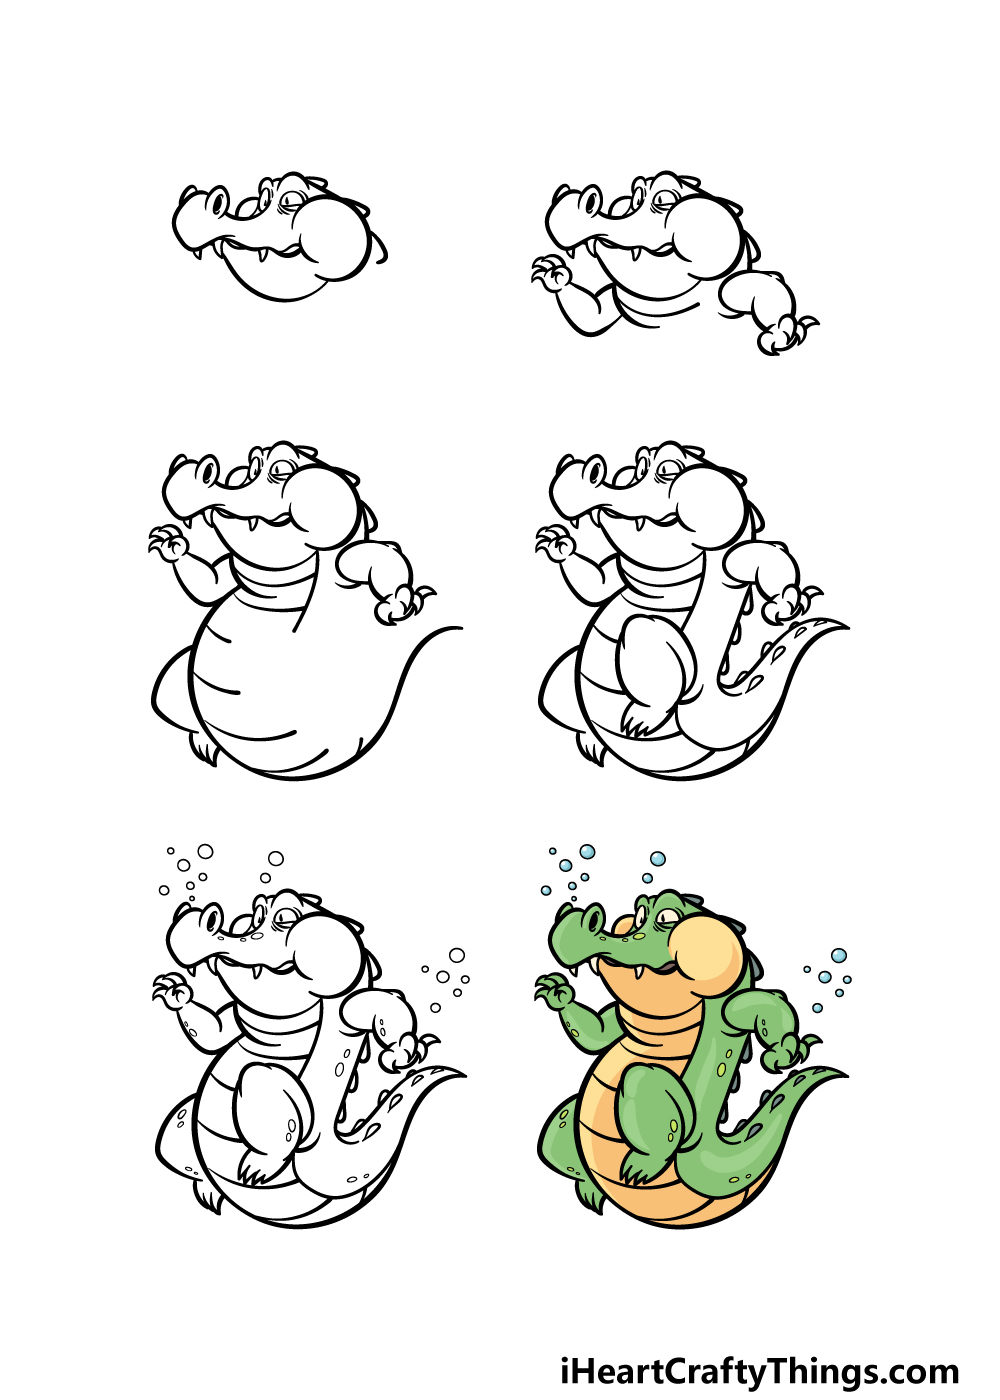 Cartoon Crocodile Drawing - How To Draw A Cartoon Crocodile Step By Step